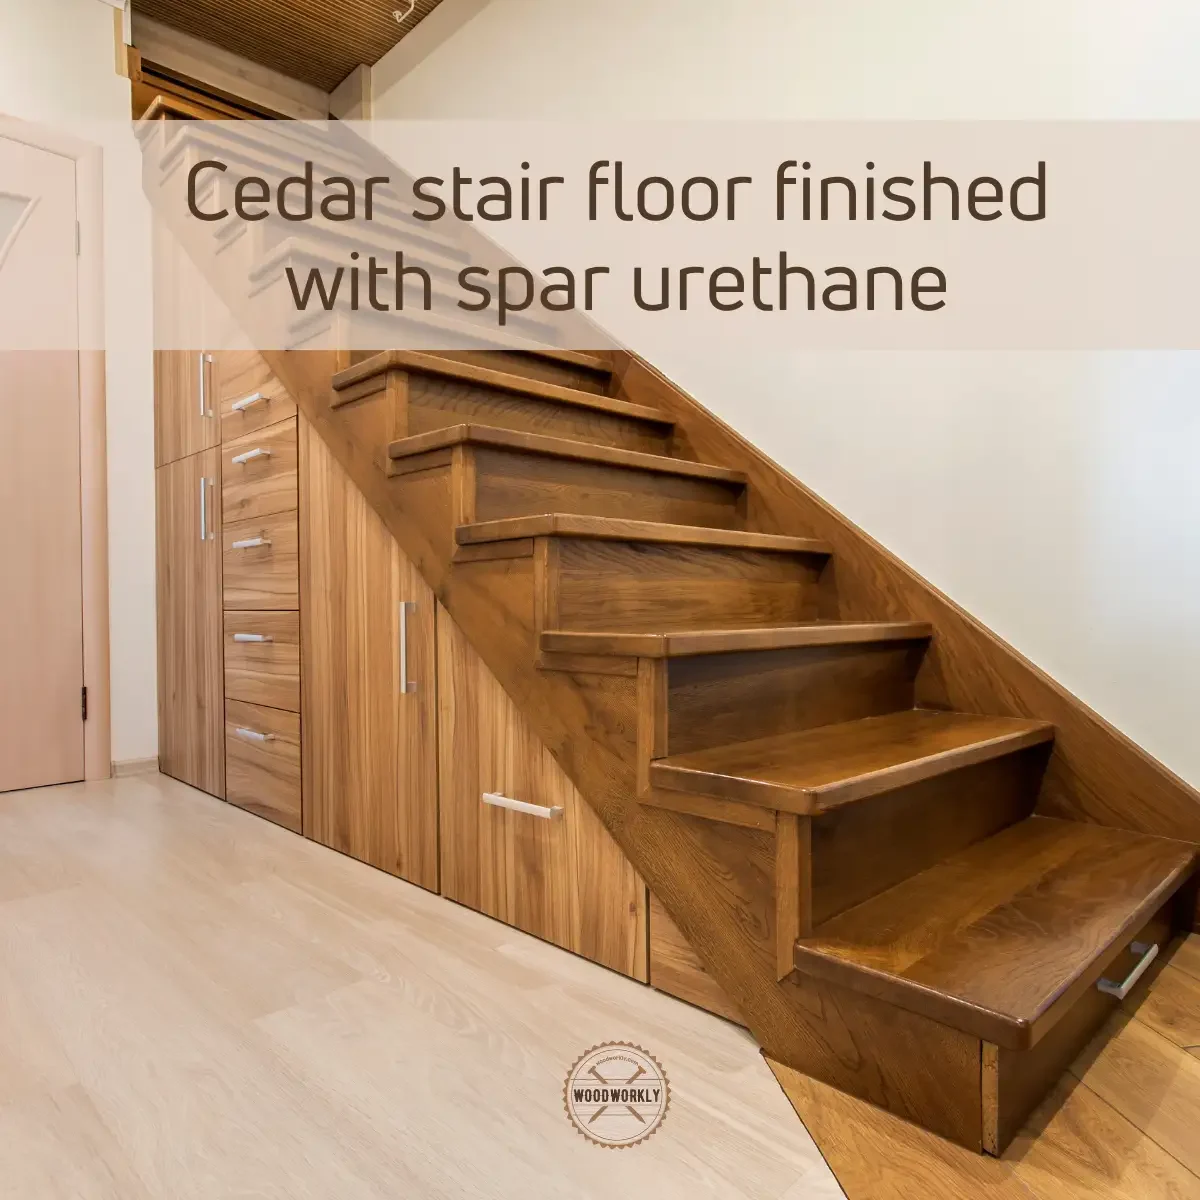 Cedar stair floor finished with spar urethane